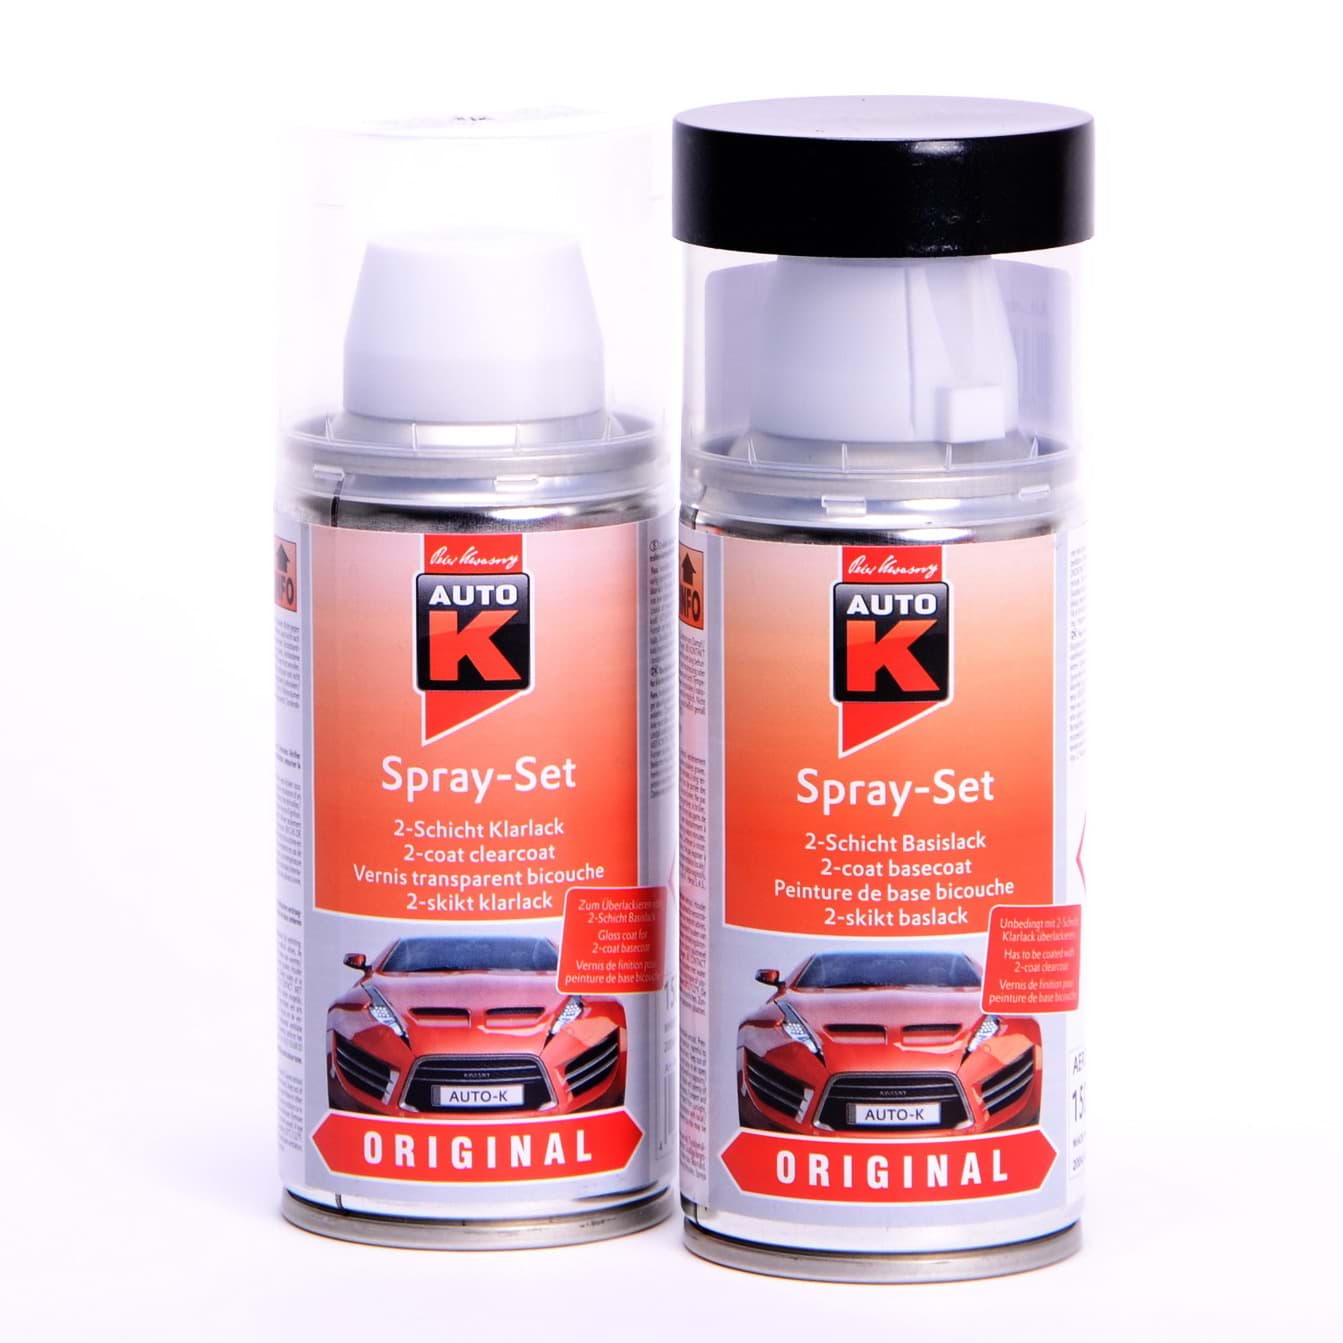 Auto-K Spray-Set Autolack für Renault 676 Noir Nacre perl met 43380 resmi